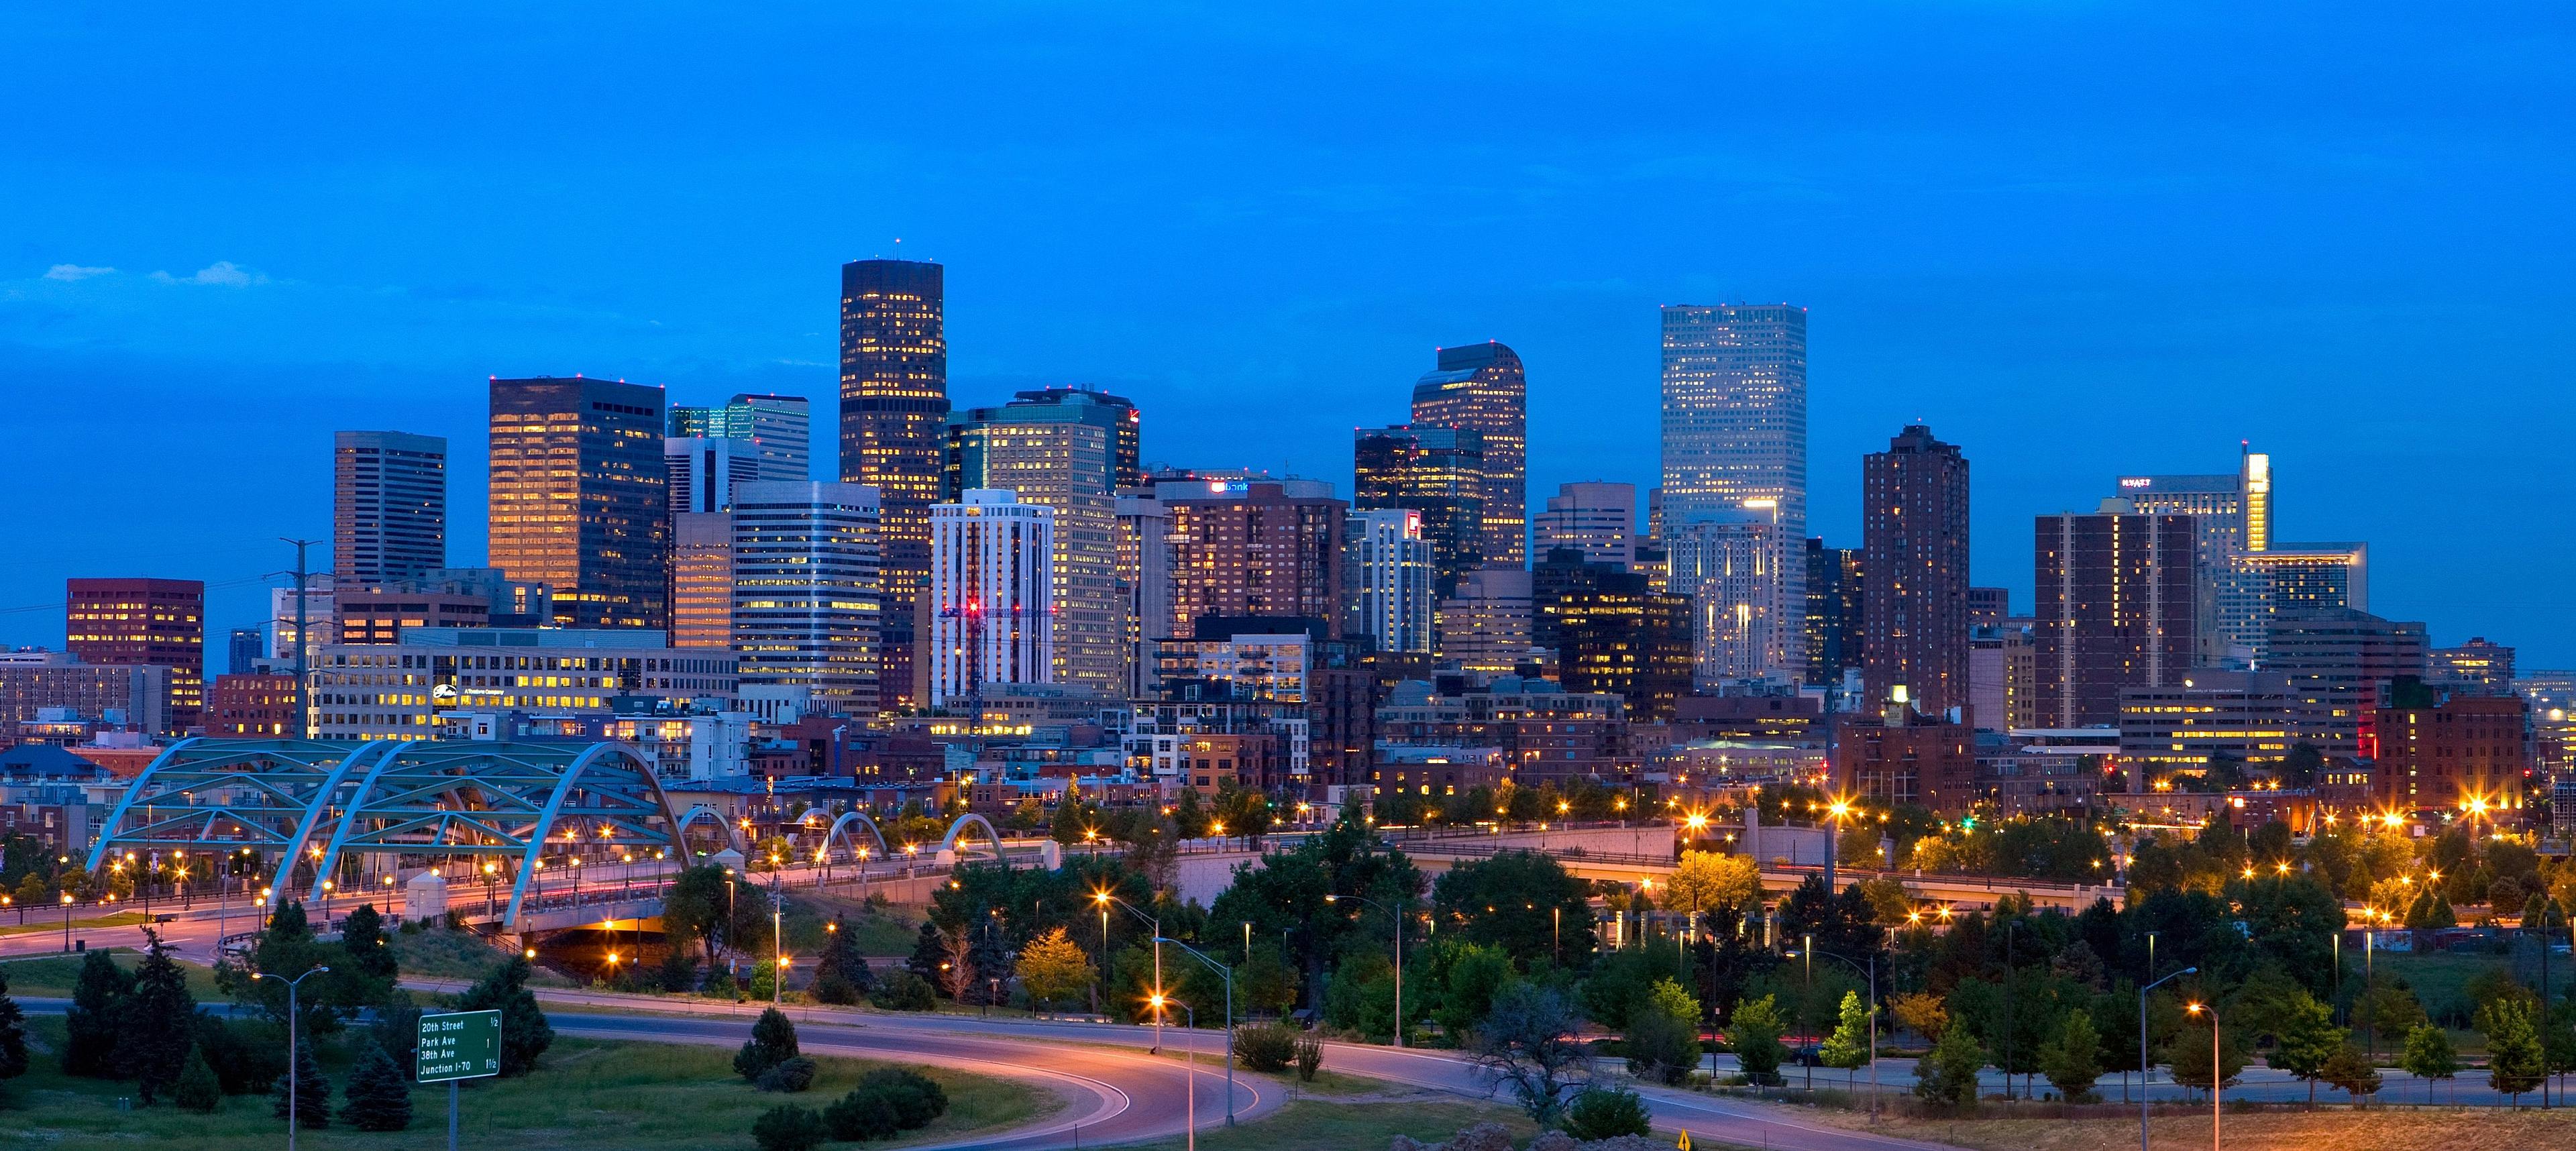 Panorama downtown Denver | Image Credit: © Betty - stock.adobe.com